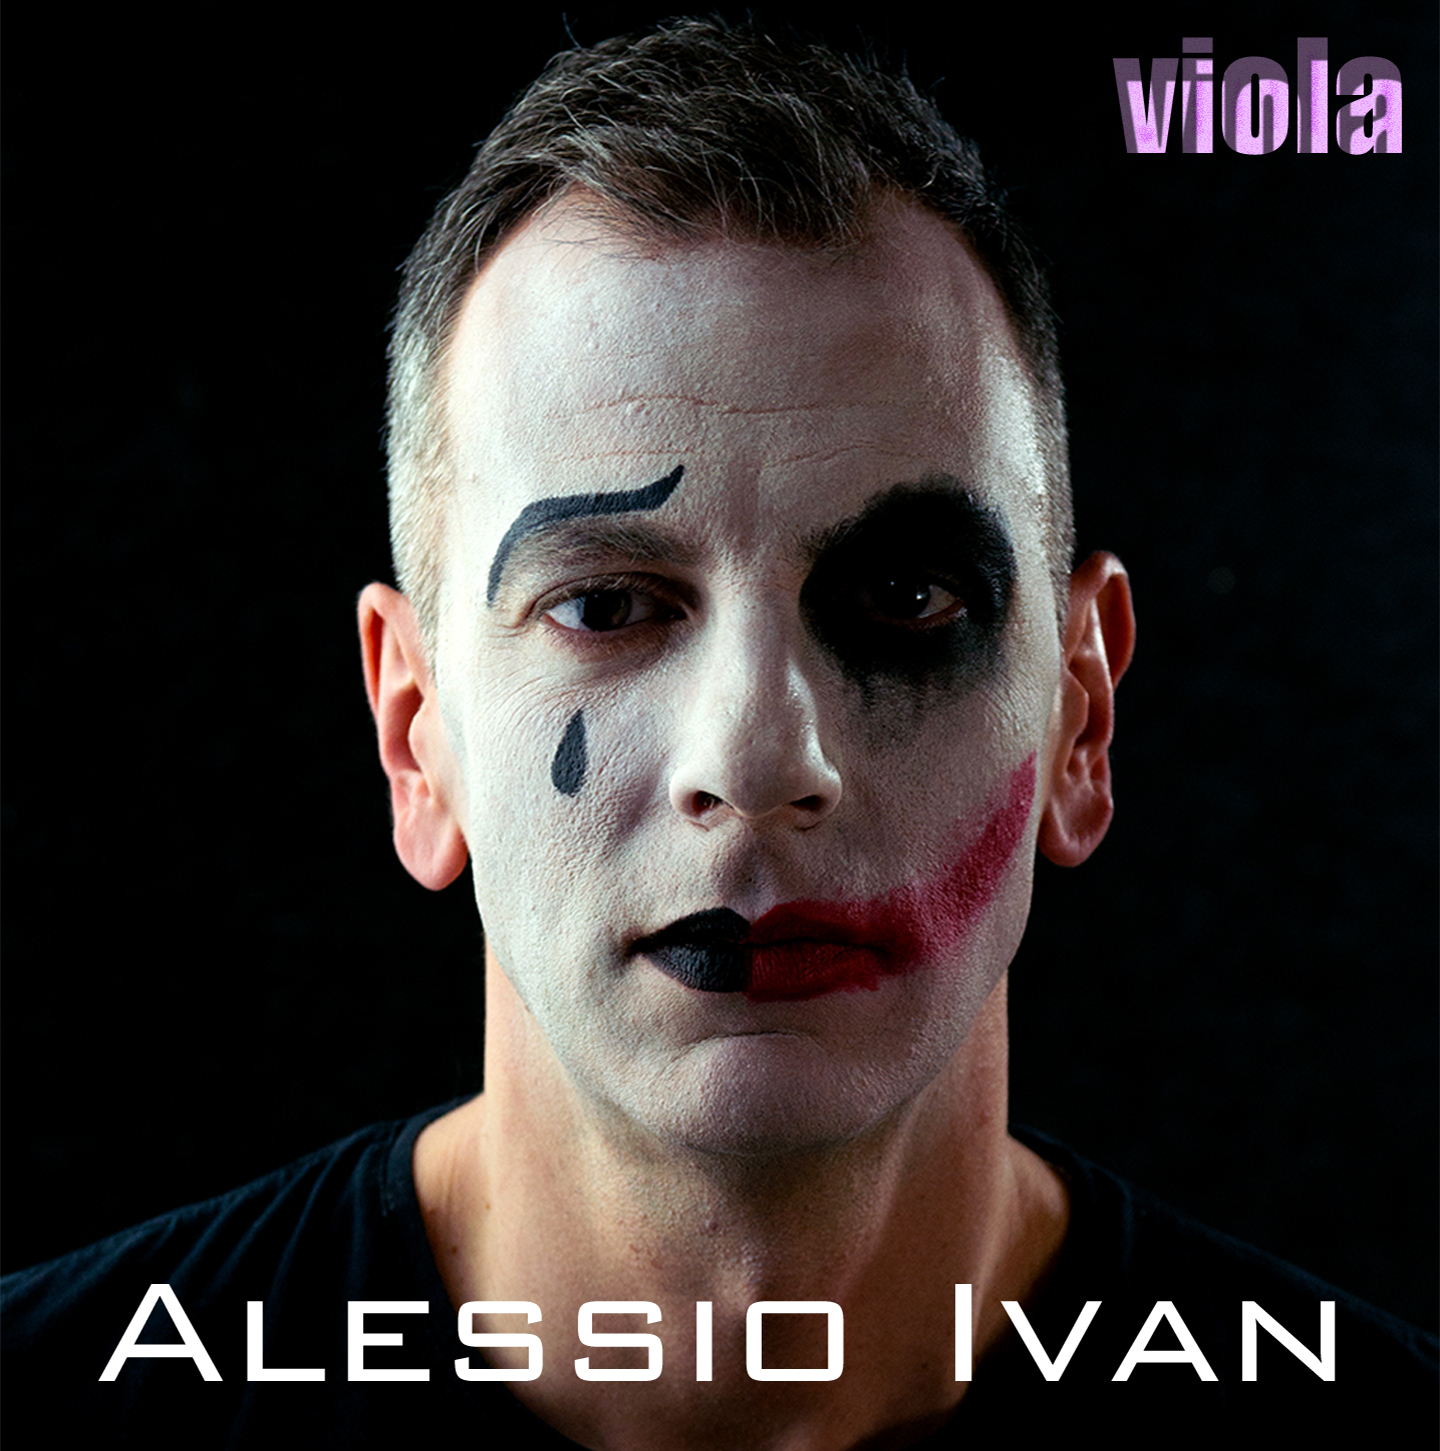 Ascolta Viola, l'album d'esordio del cantautore Alessio Ivan